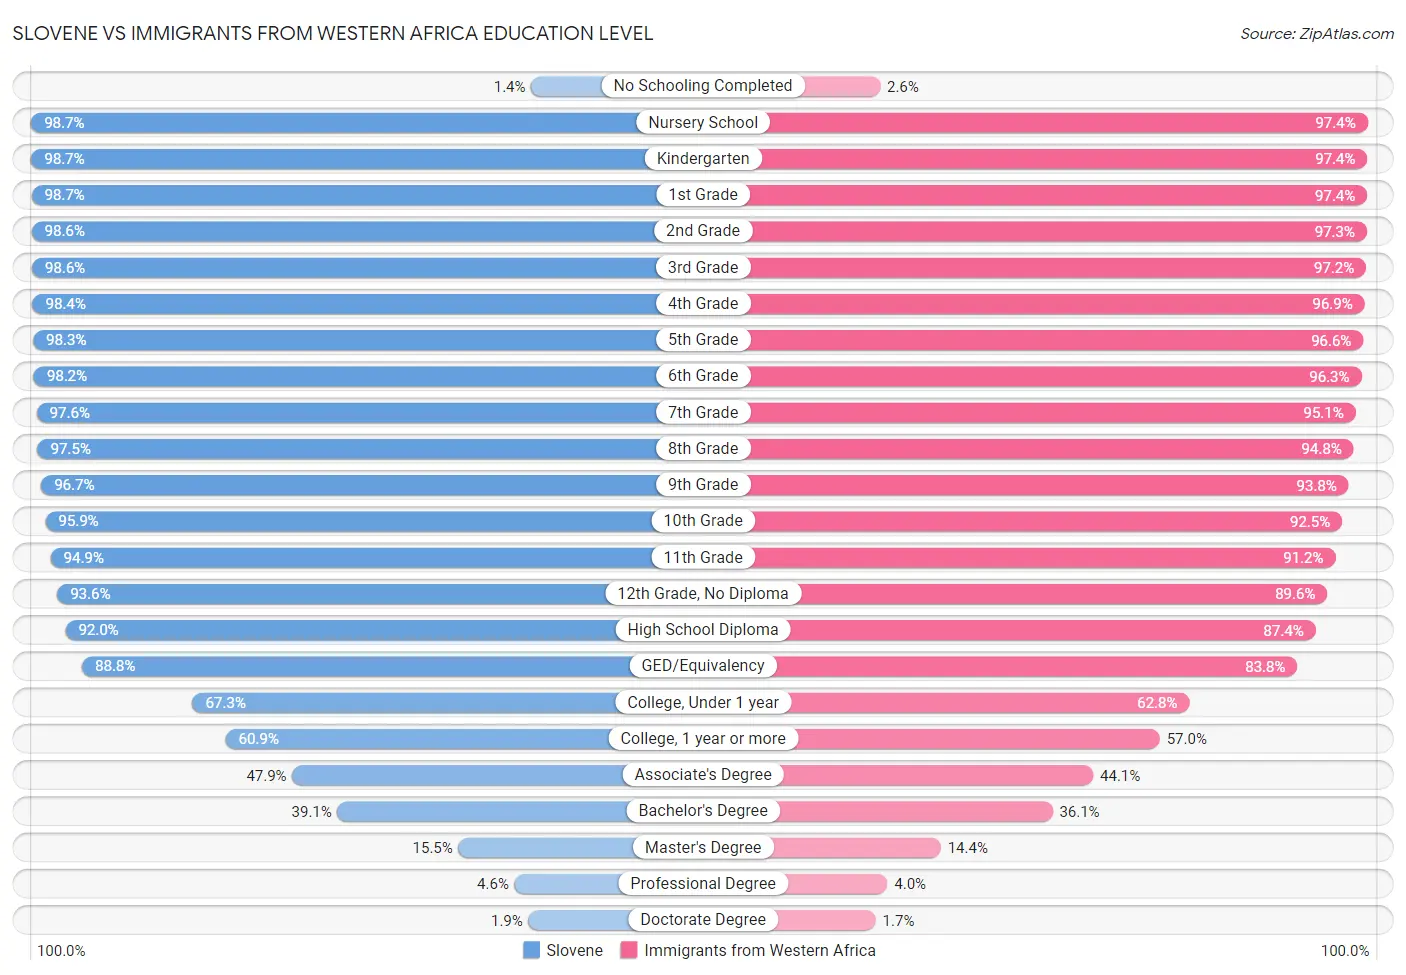 Slovene vs Immigrants from Western Africa Education Level